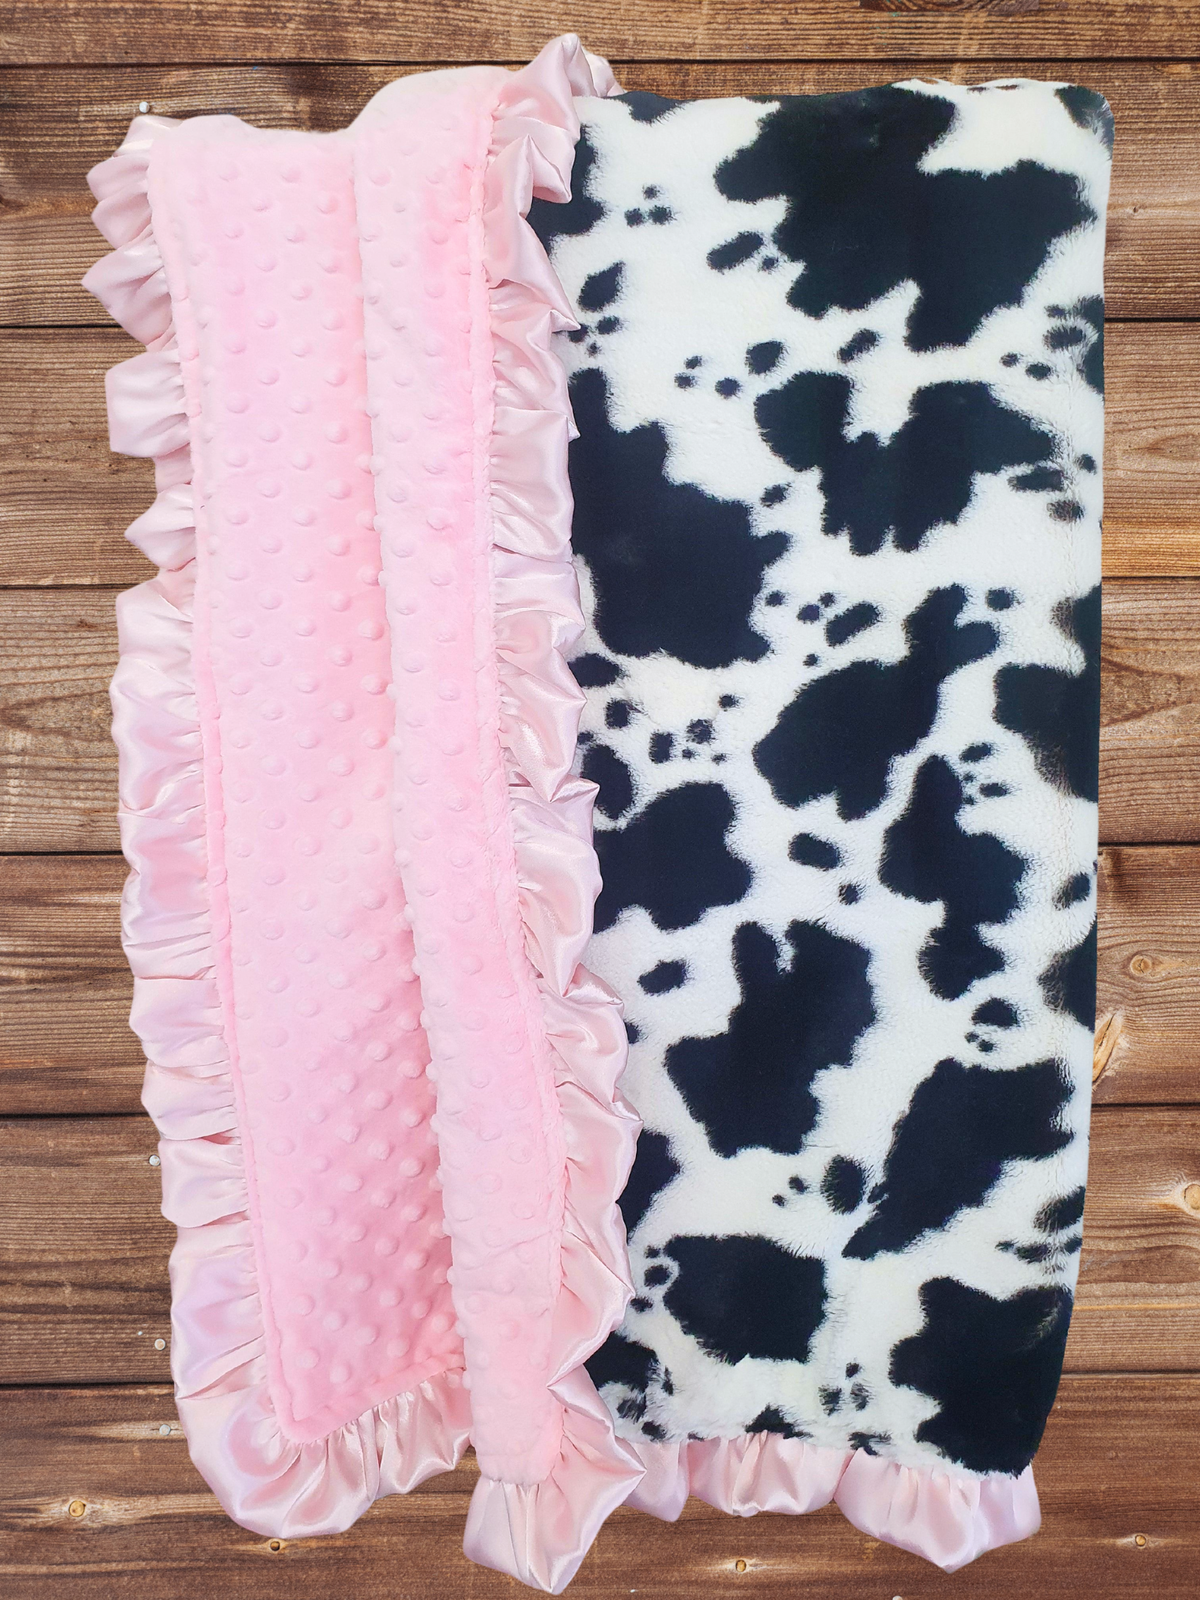 Ruffle Baby Blanket - Black White Cow Minky and Blush Minky Farm Blanket - DBC Baby Bedding Co 